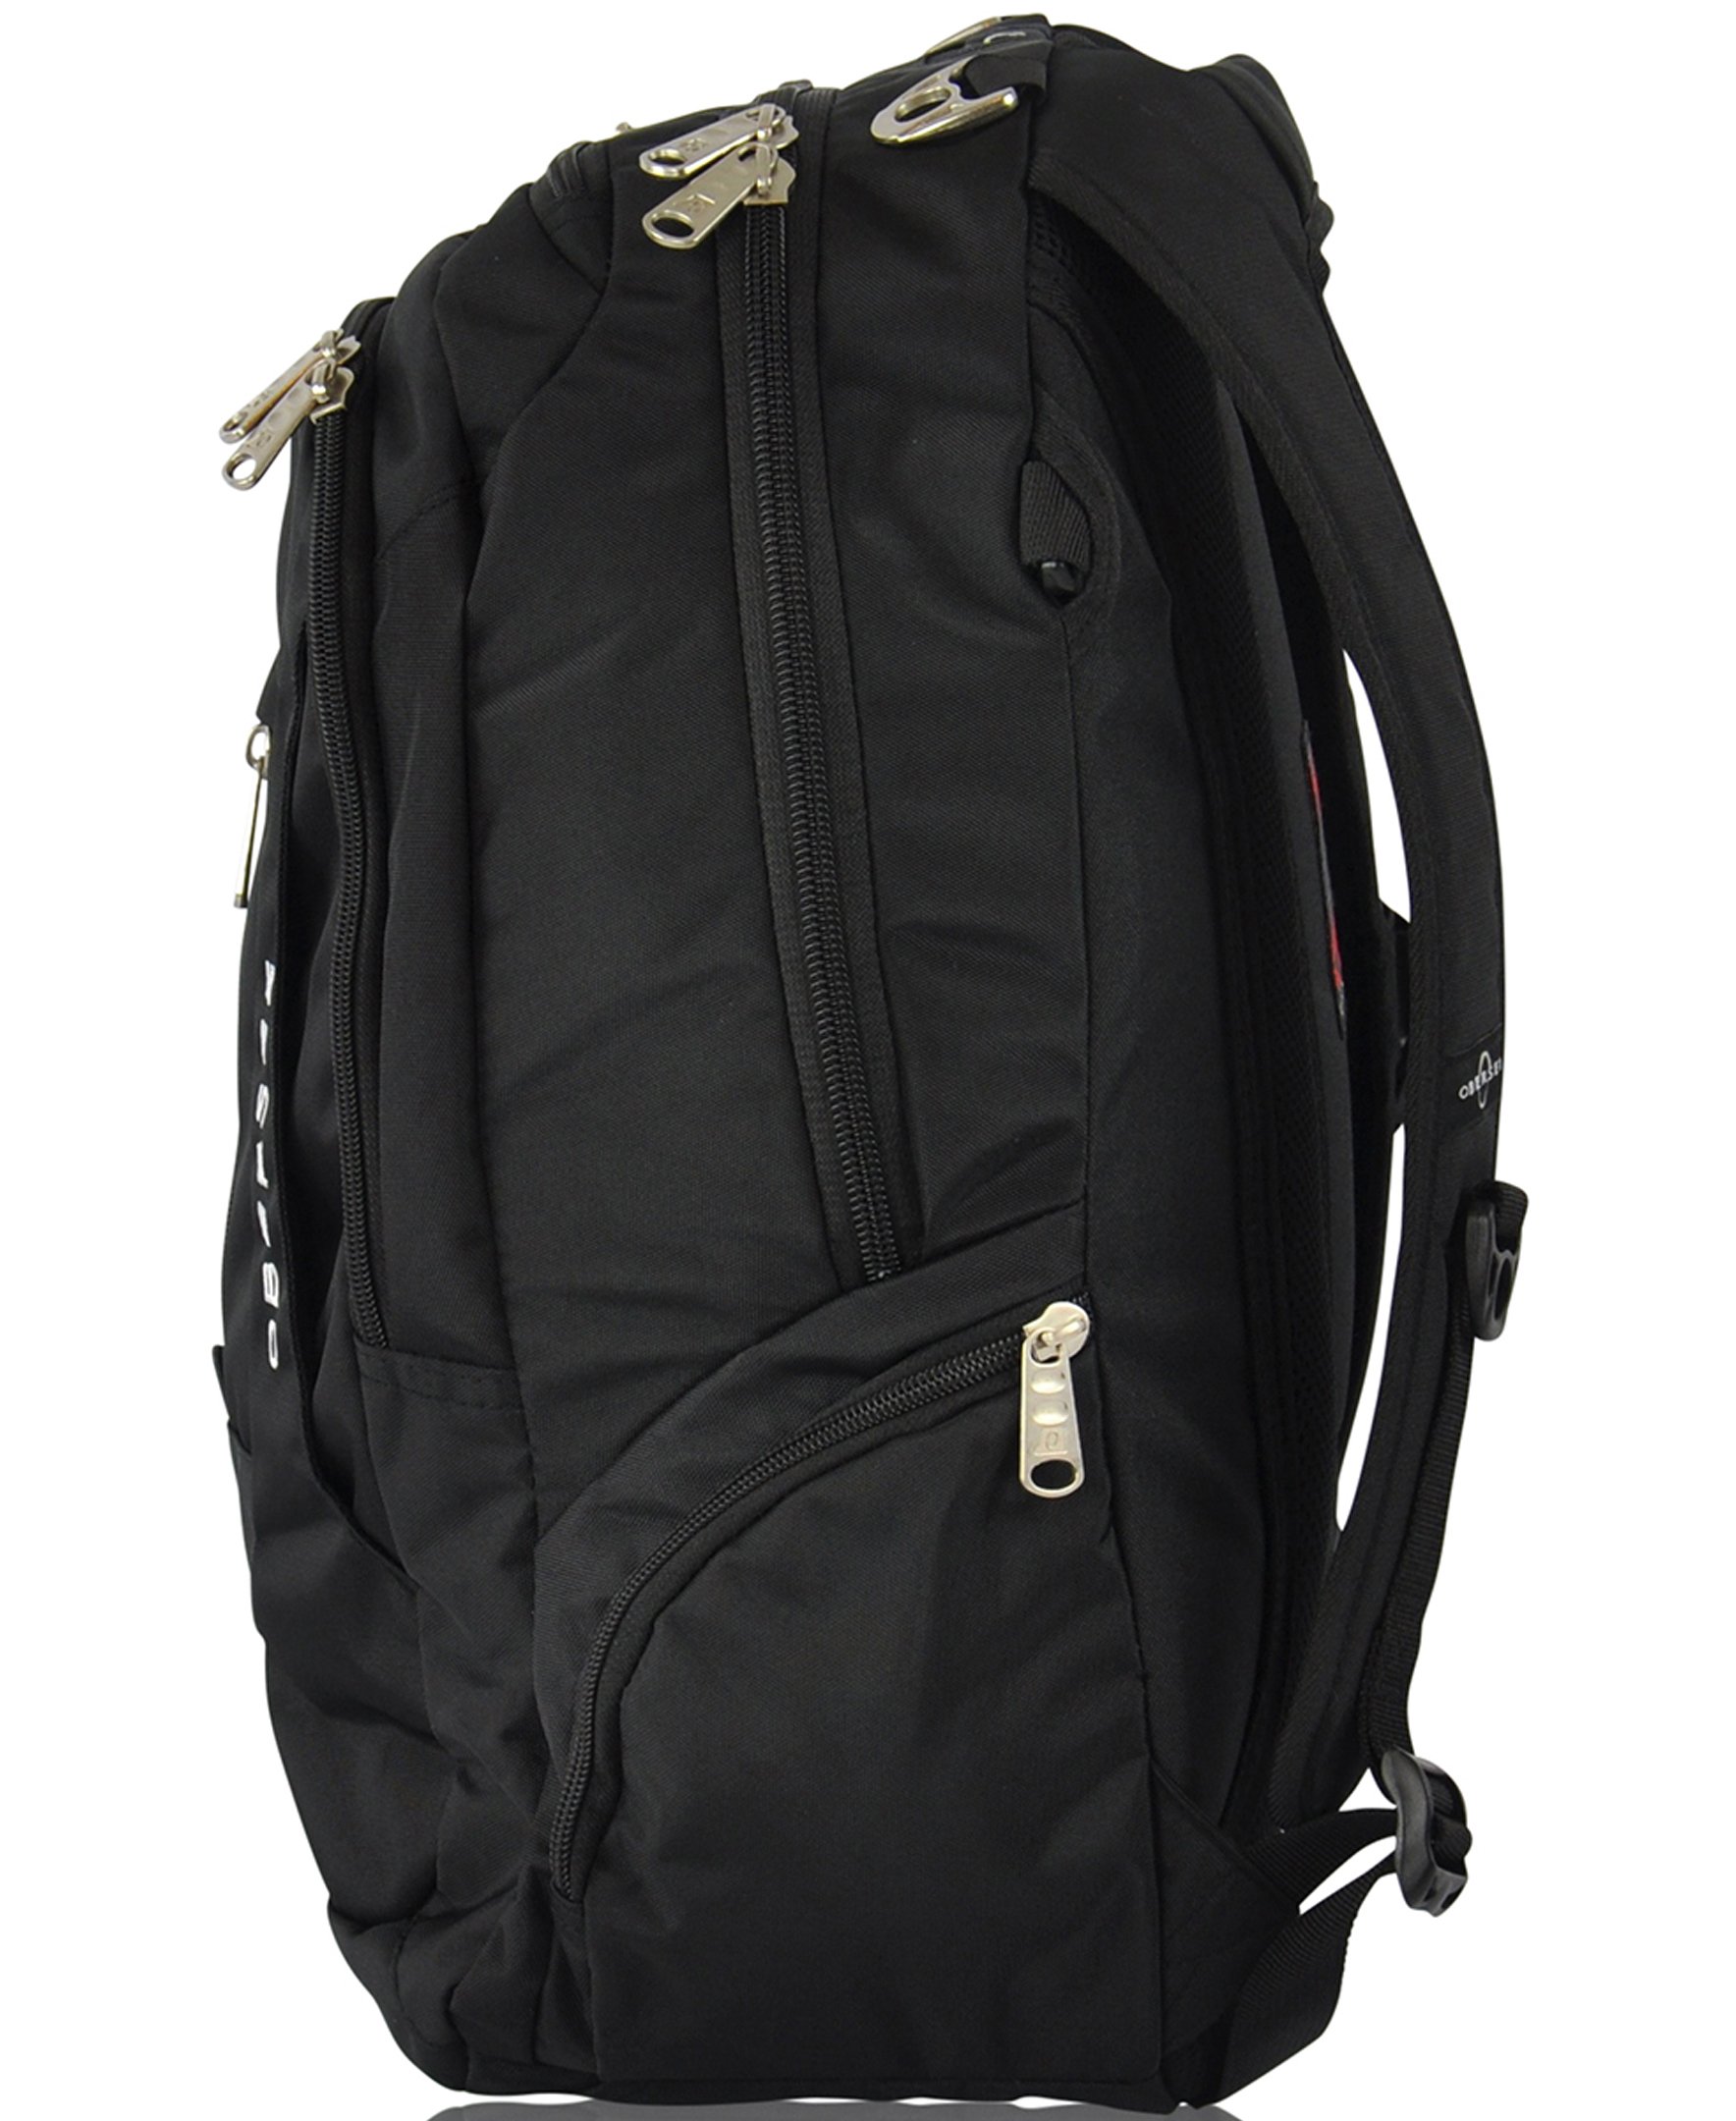 Obersee Bern Diaper Bag Backpack and Cooler, Black/Sand - image 5 of 10